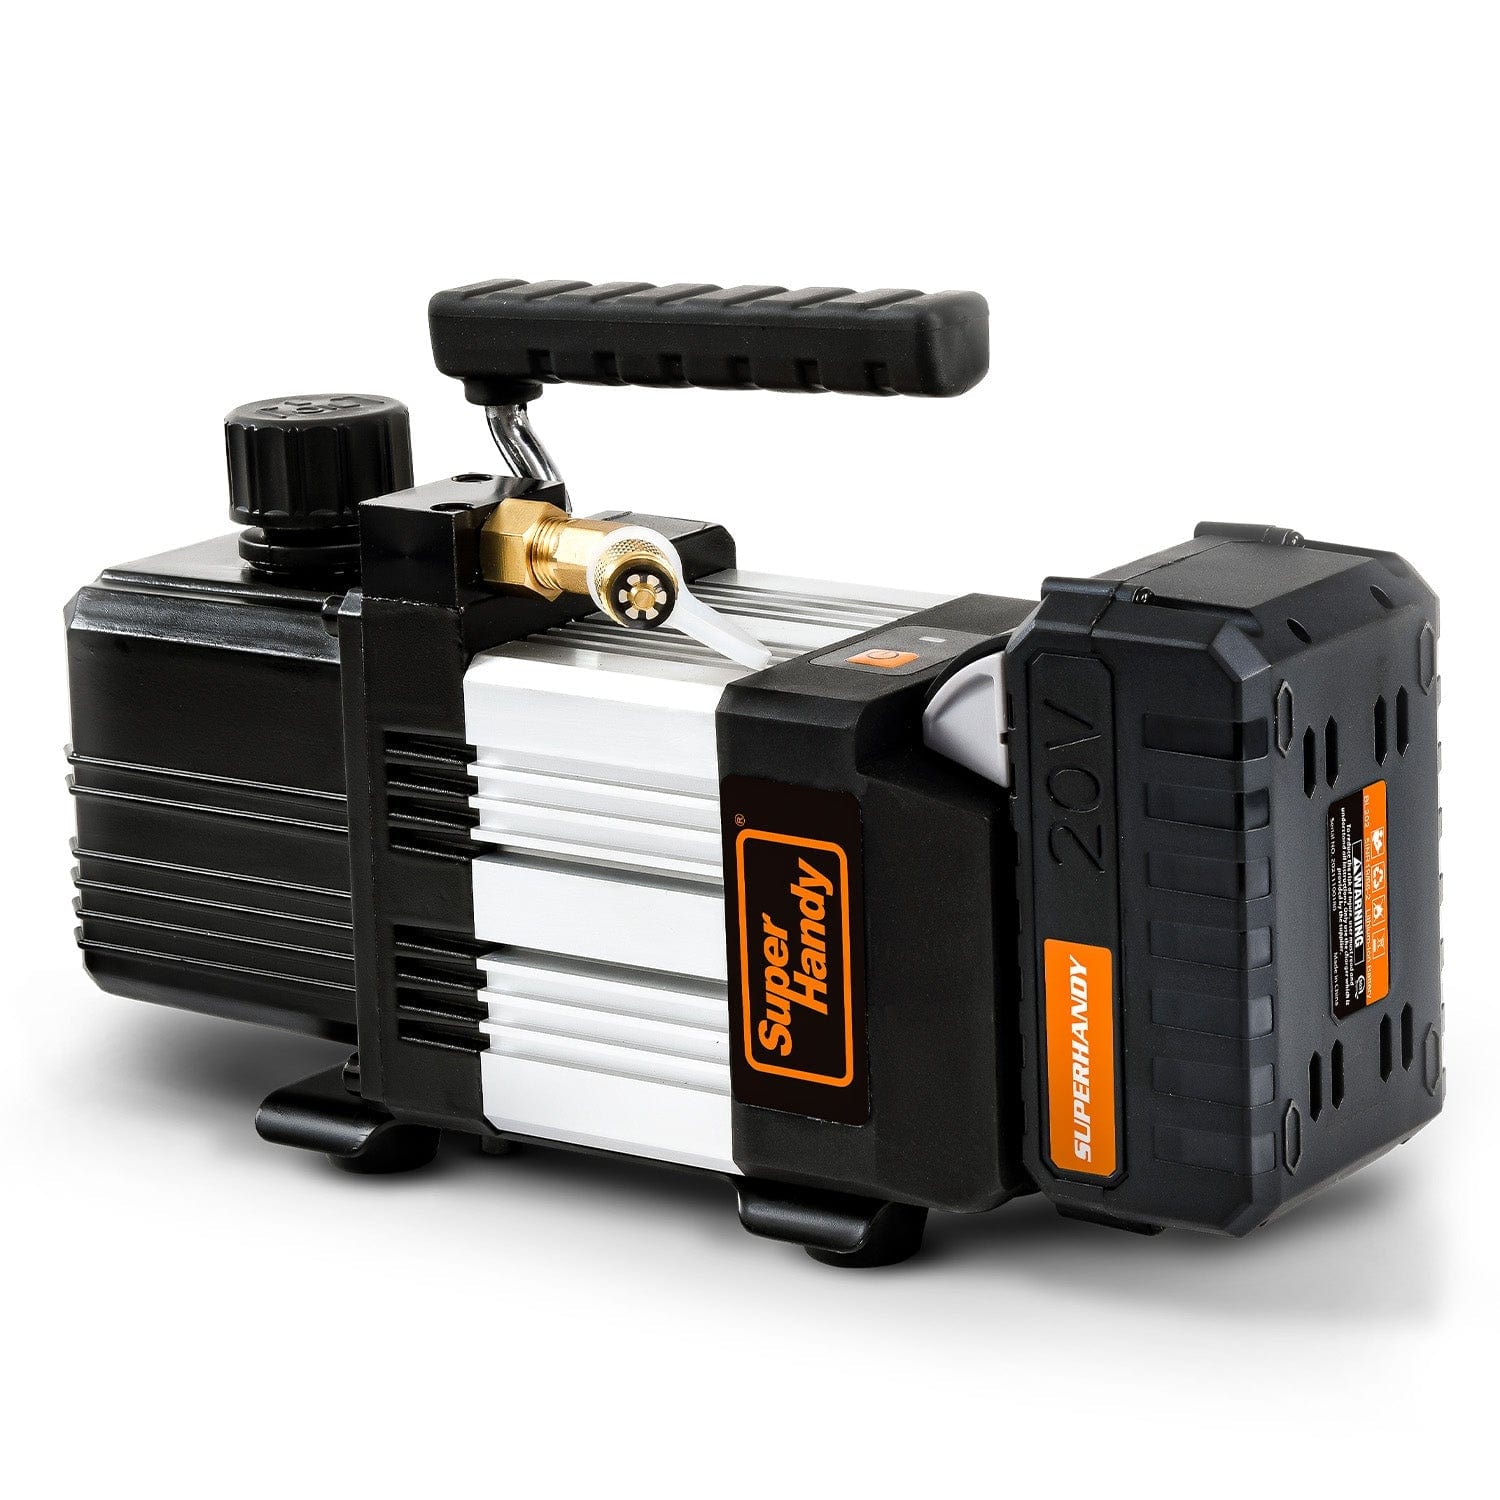 SuperHandy Portable Vacuum Pump - 20V 2Ah Battery, Single Stage 3CFM